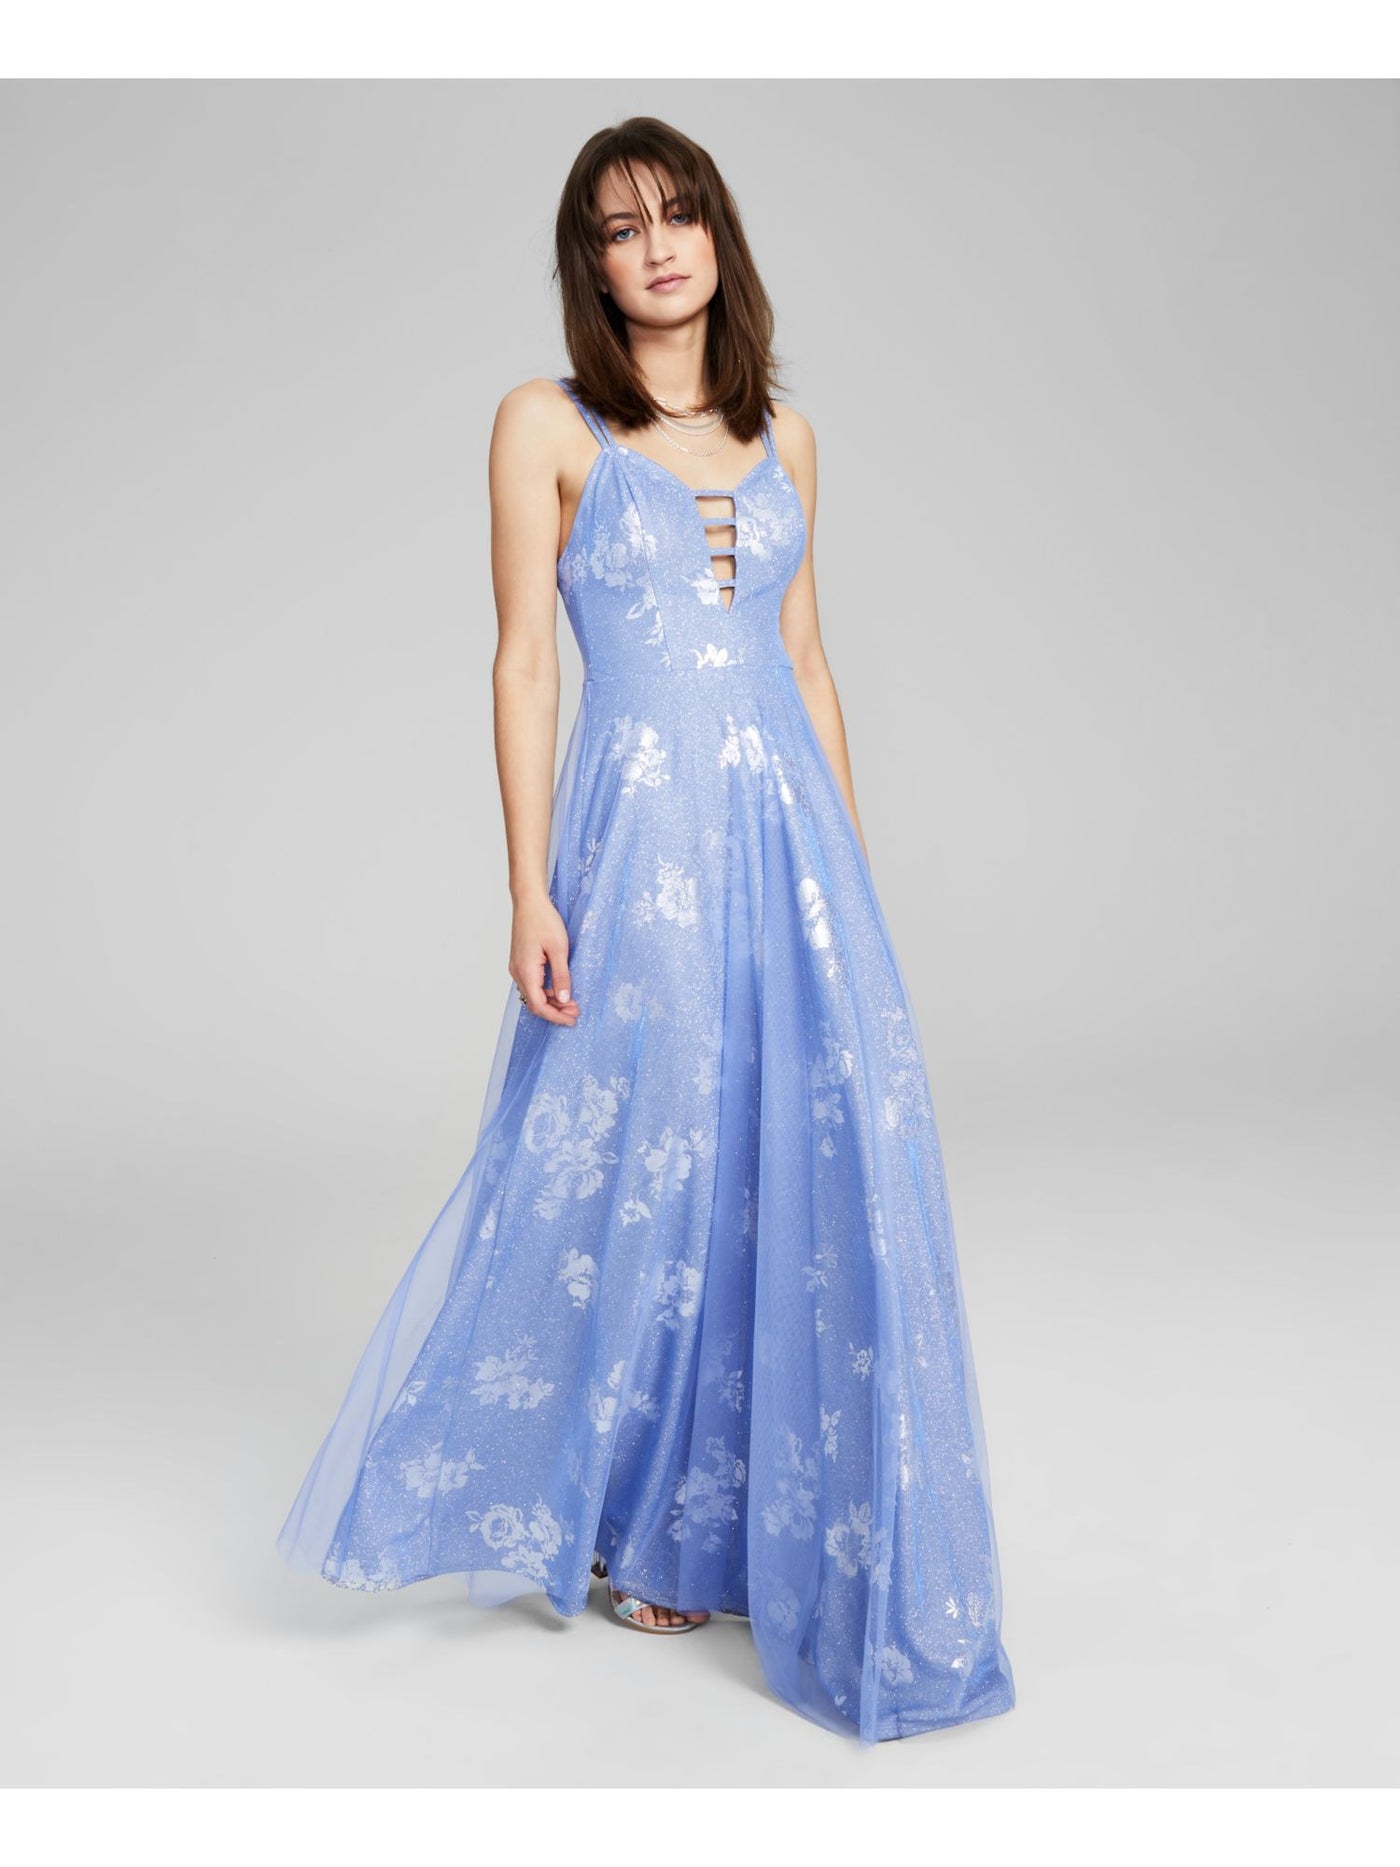 CITY STUDIO Womens Light Blue Glitter Zippered Strappy Detail Lined Floral Sleeveless V Neck Full-Length Prom Gown Dress Juniors 9